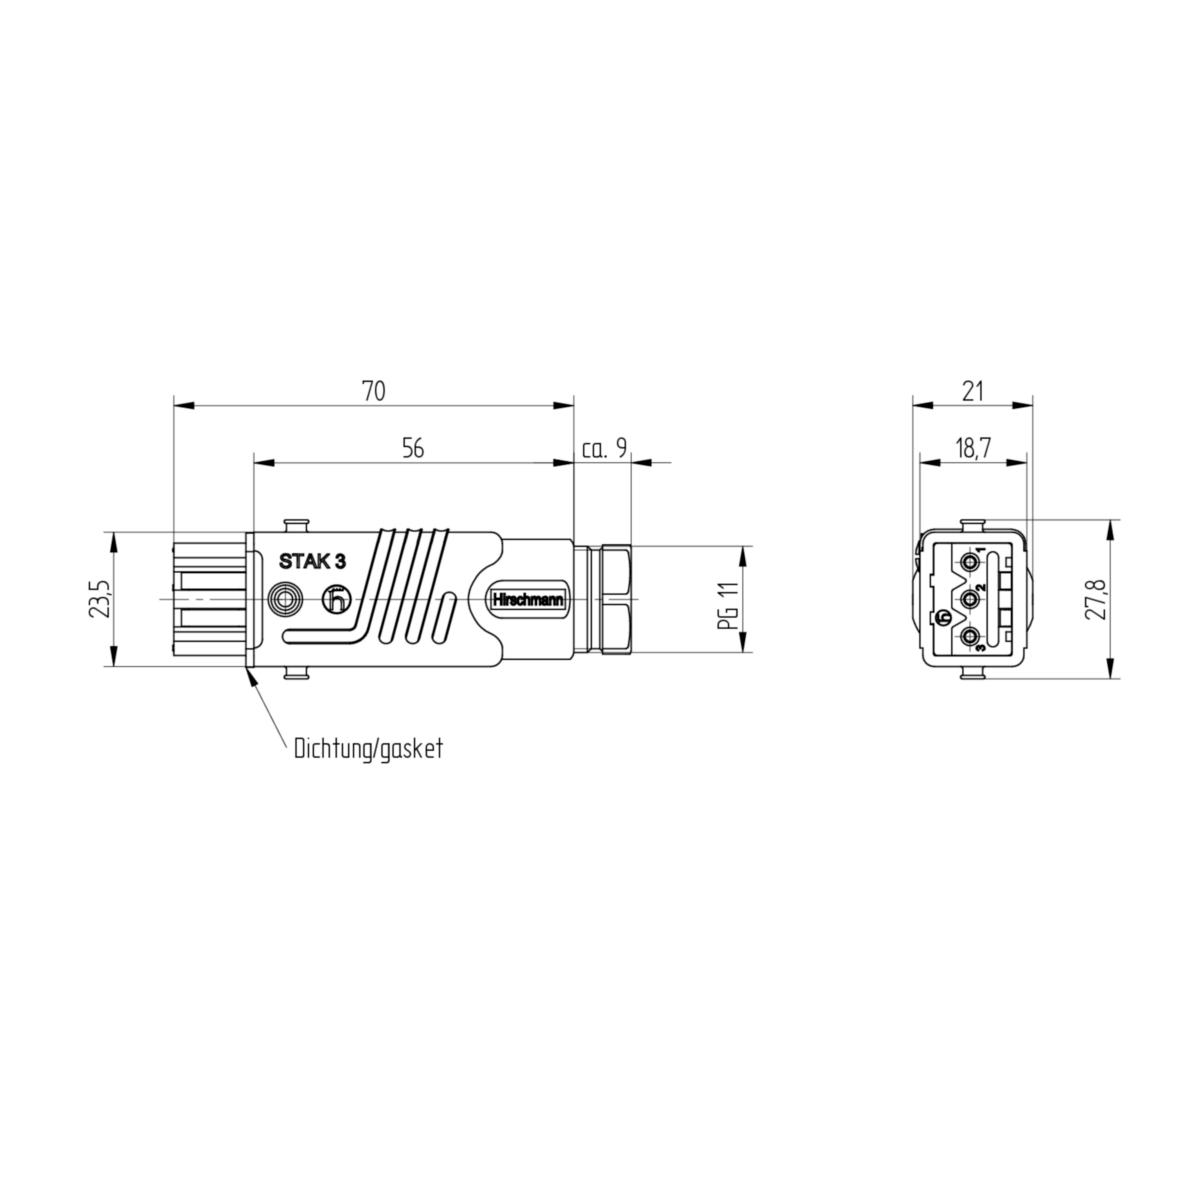 Plug in radio control receiver for motor 1 hirschmann stak stas 3 n 